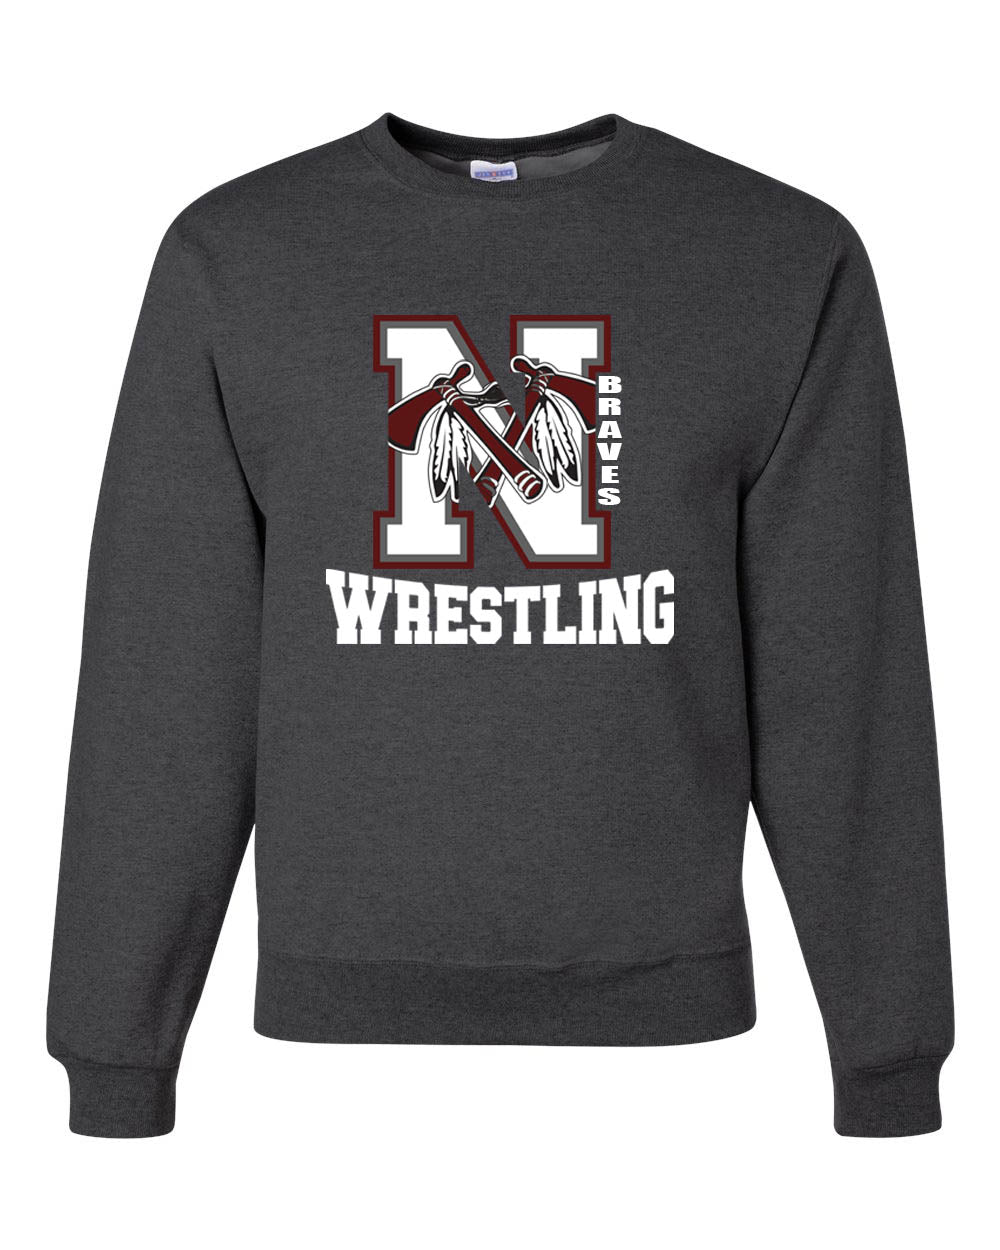 Newton wrestling Design 4 non hooded sweatshirt